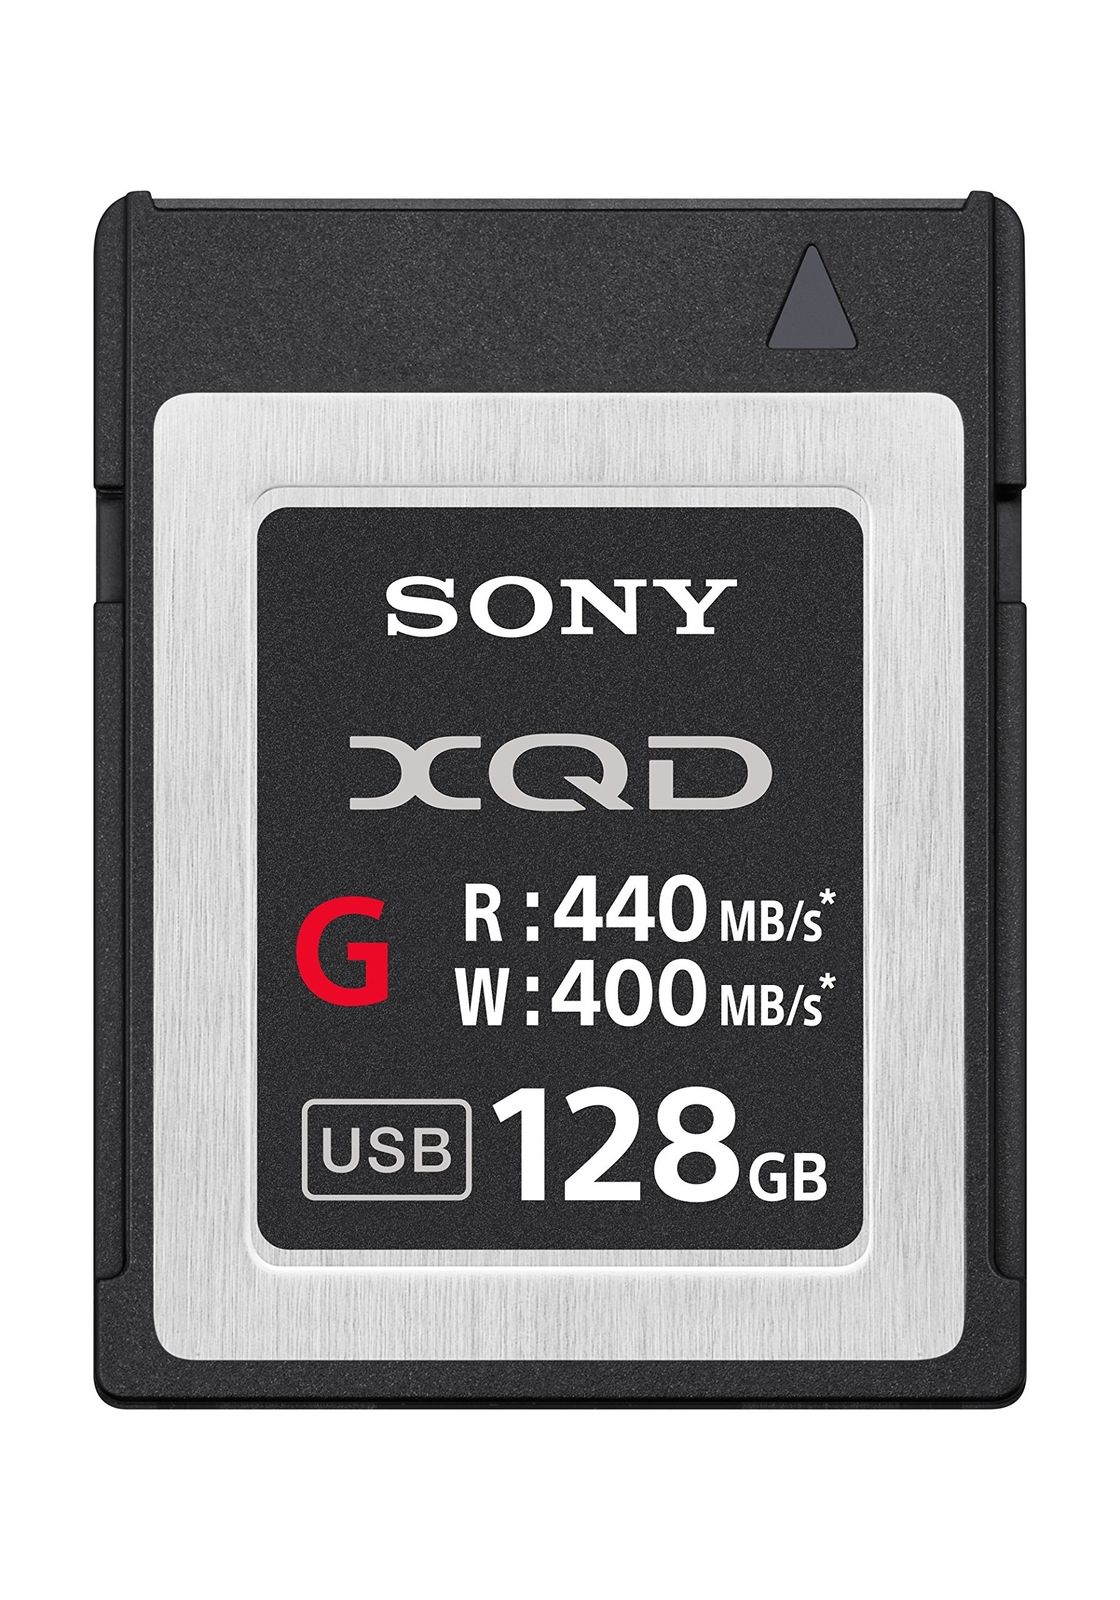 Sony QDG128E/J Memory Card Xqd G Series Qdm128e/j 128gb 440mb/s Read 400mb/s